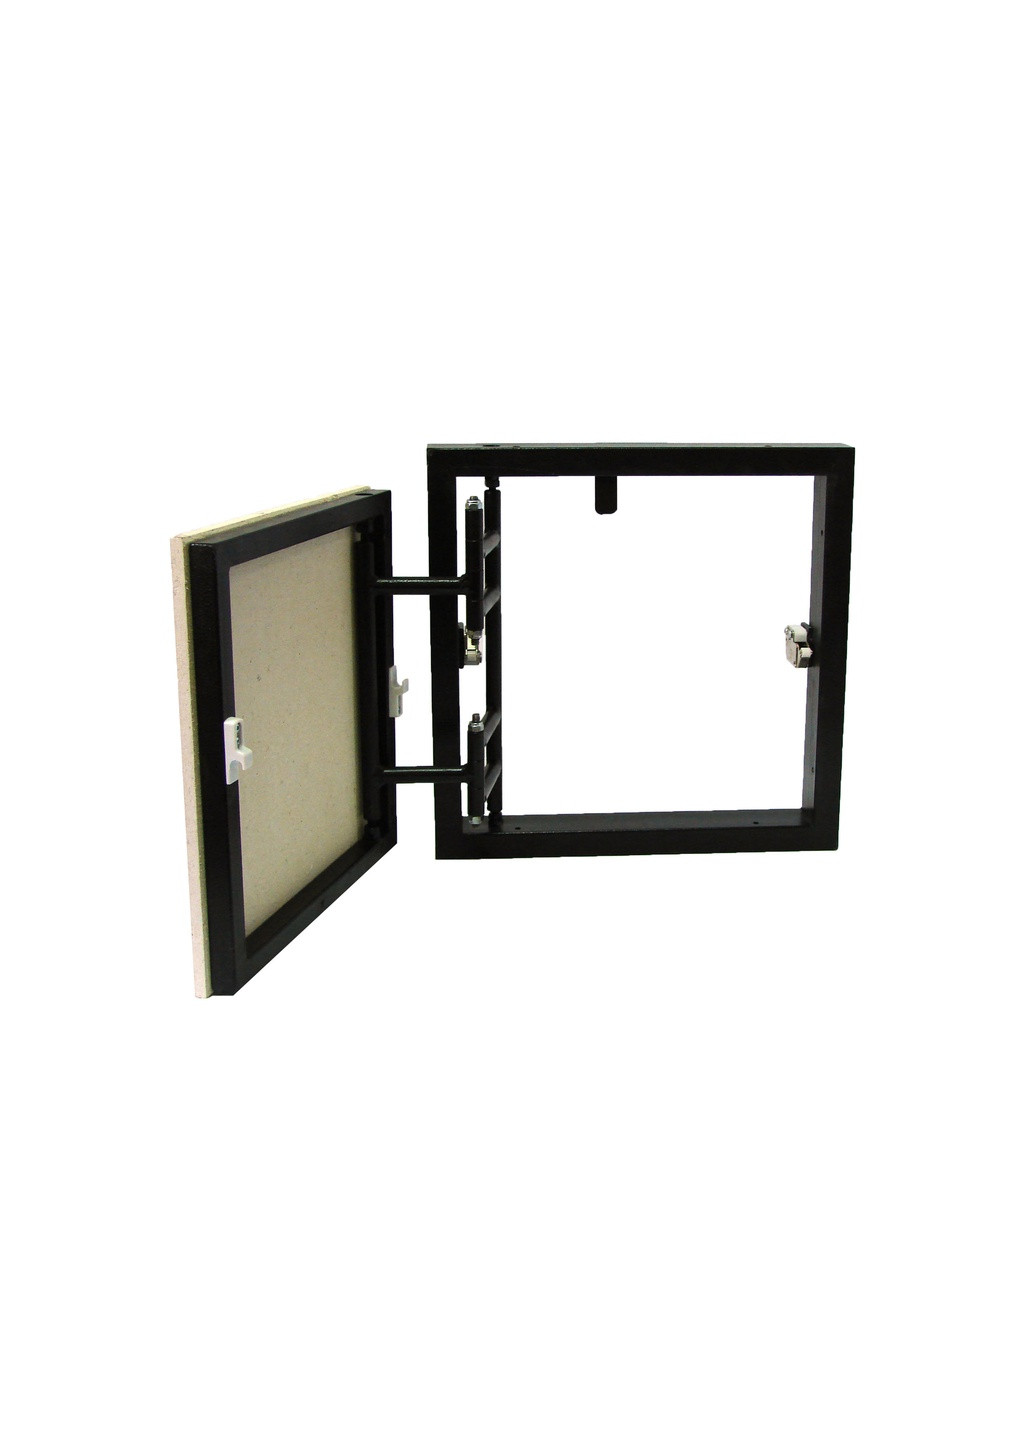 Ревизионный люк скрытого монтажа под плитку нажимного типа 400x400 ревизионная дверца для плитки (1105) S-Dom (264208715)